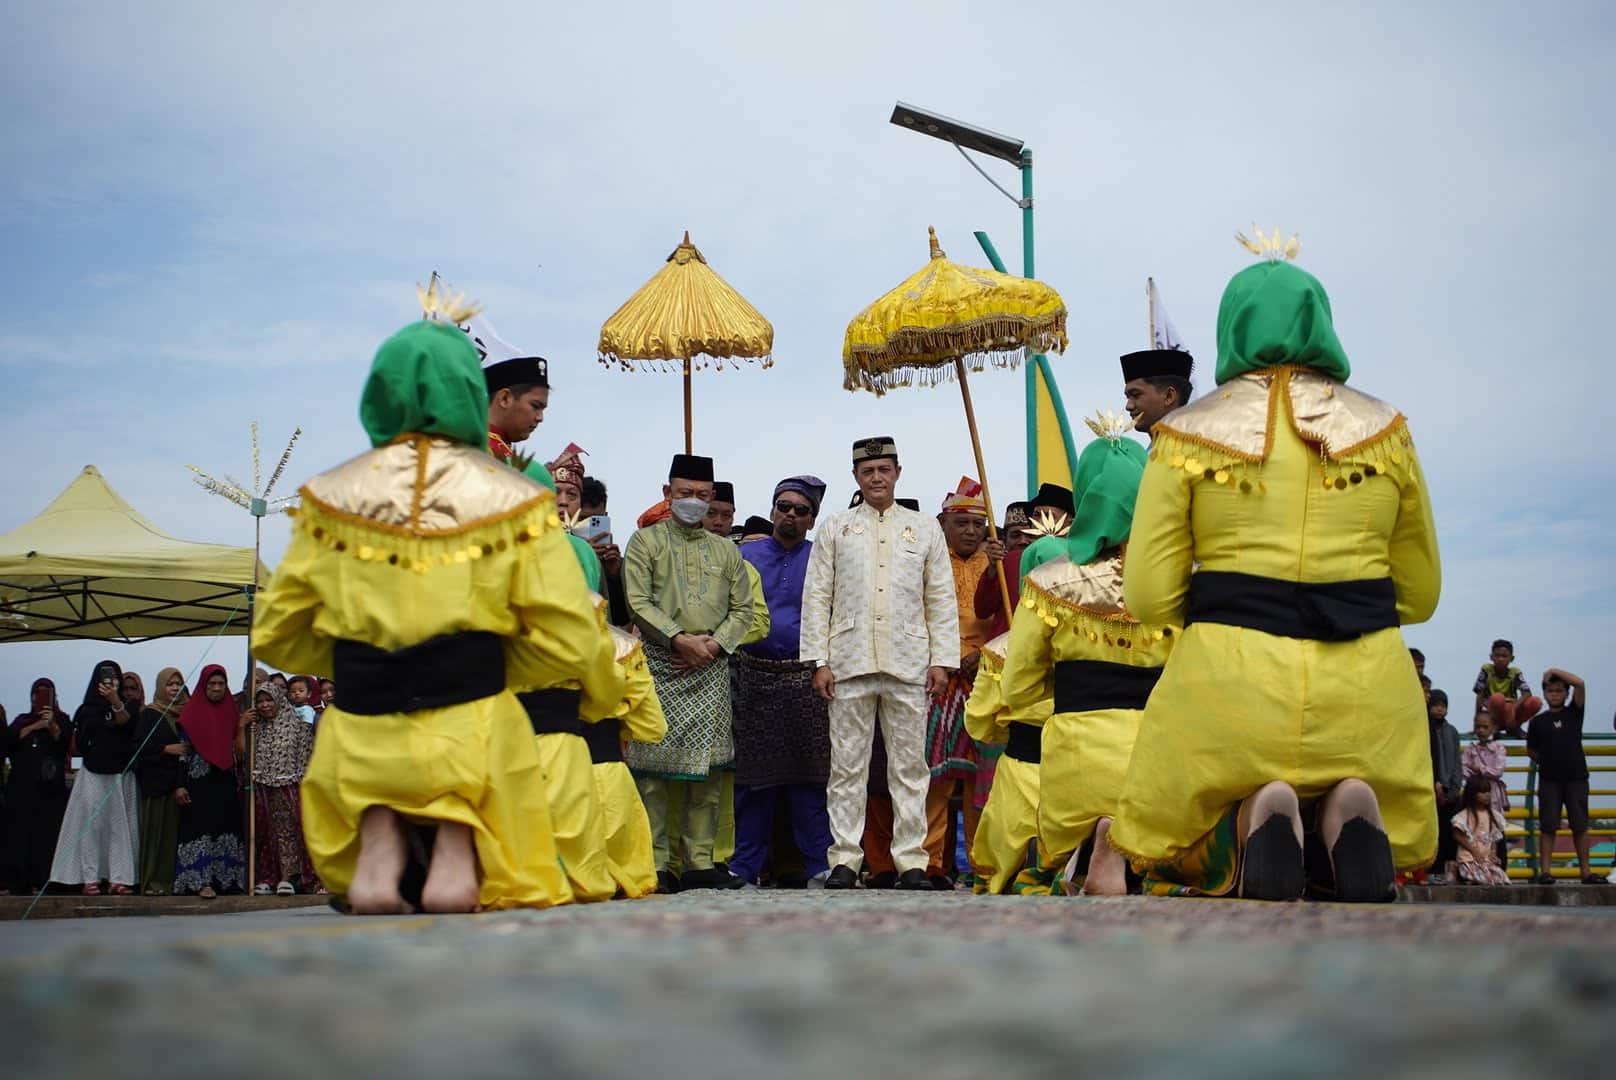 Wali Kota Pontianak Edi Rusdi Kamtono bersama Sultan Pontianak IX Syarif Machmud Melvin Alkadrie, disambut kedatangannya dengan tarian Melayu. (Foto: Prokopim)